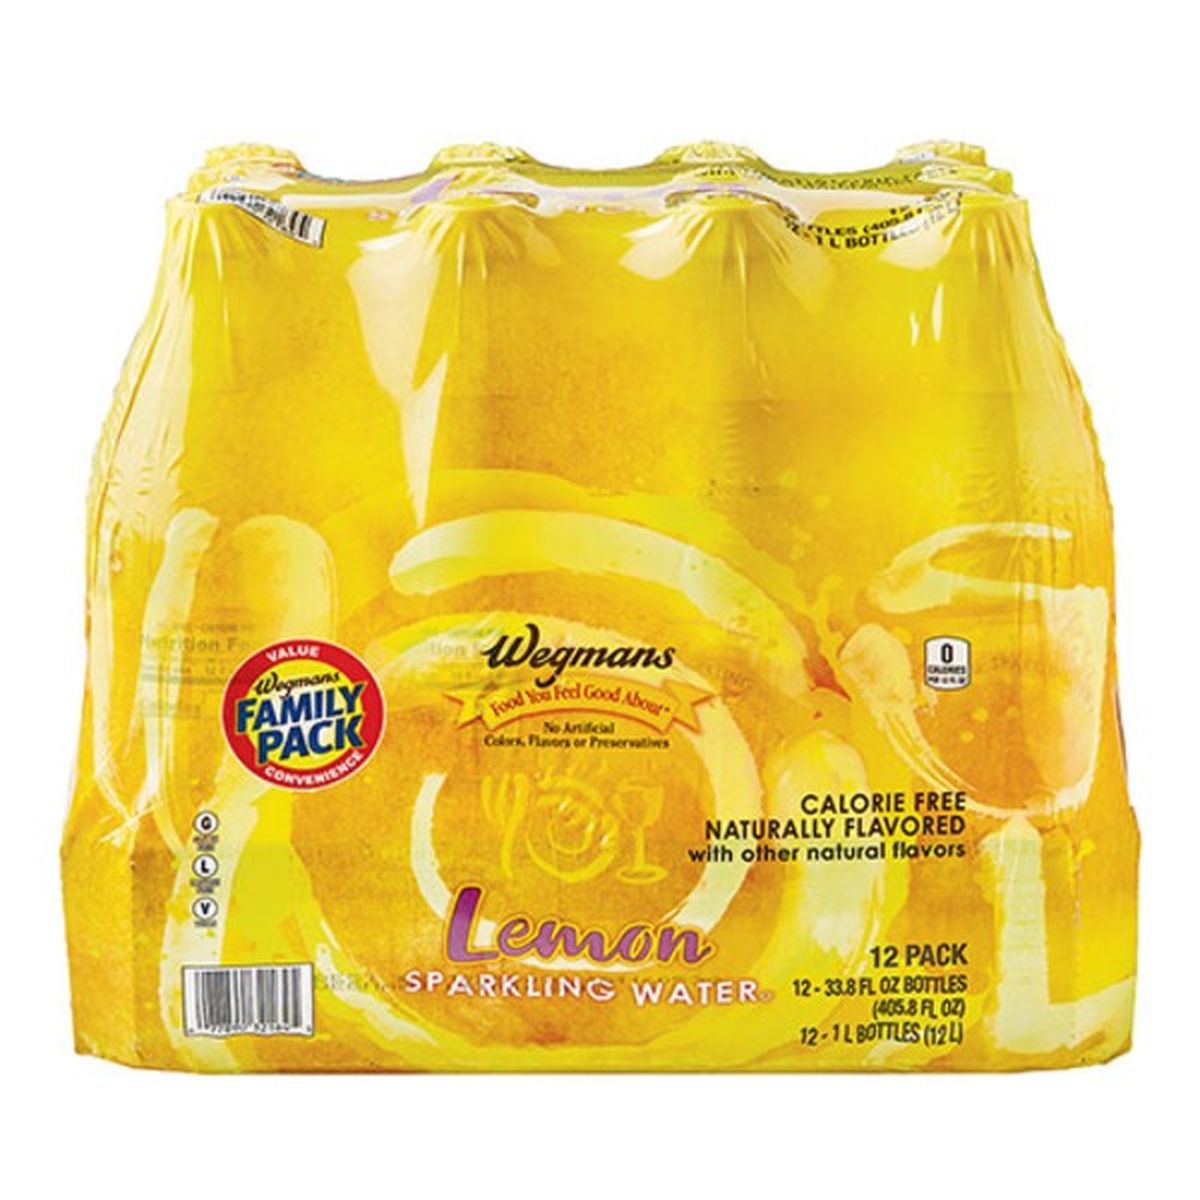 Calories in Wegmans Sparkling Water Lemon, FAMILY PACK